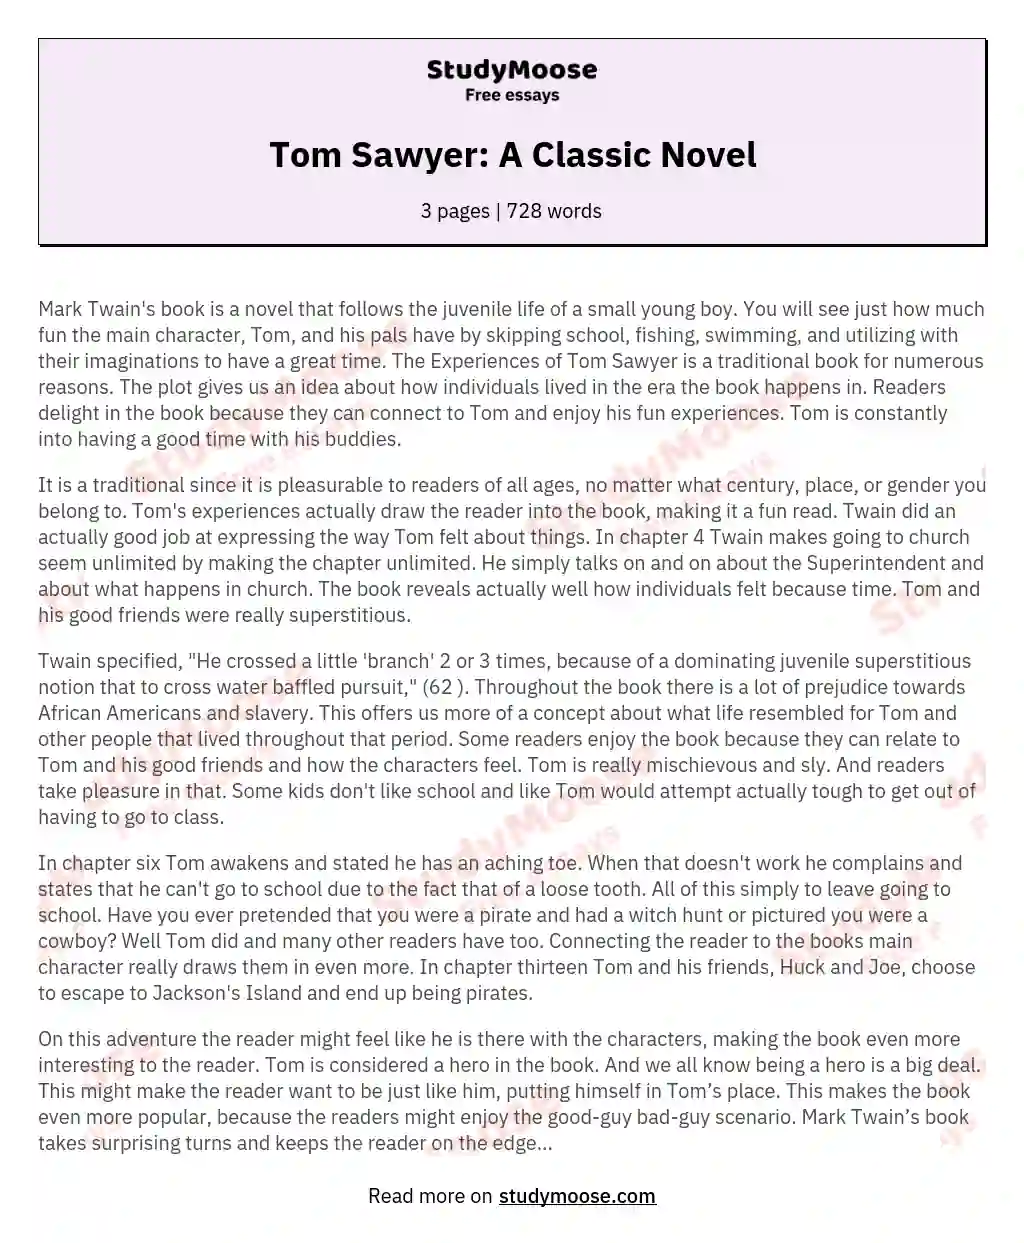 Tom Sawyer: A Classic Novel